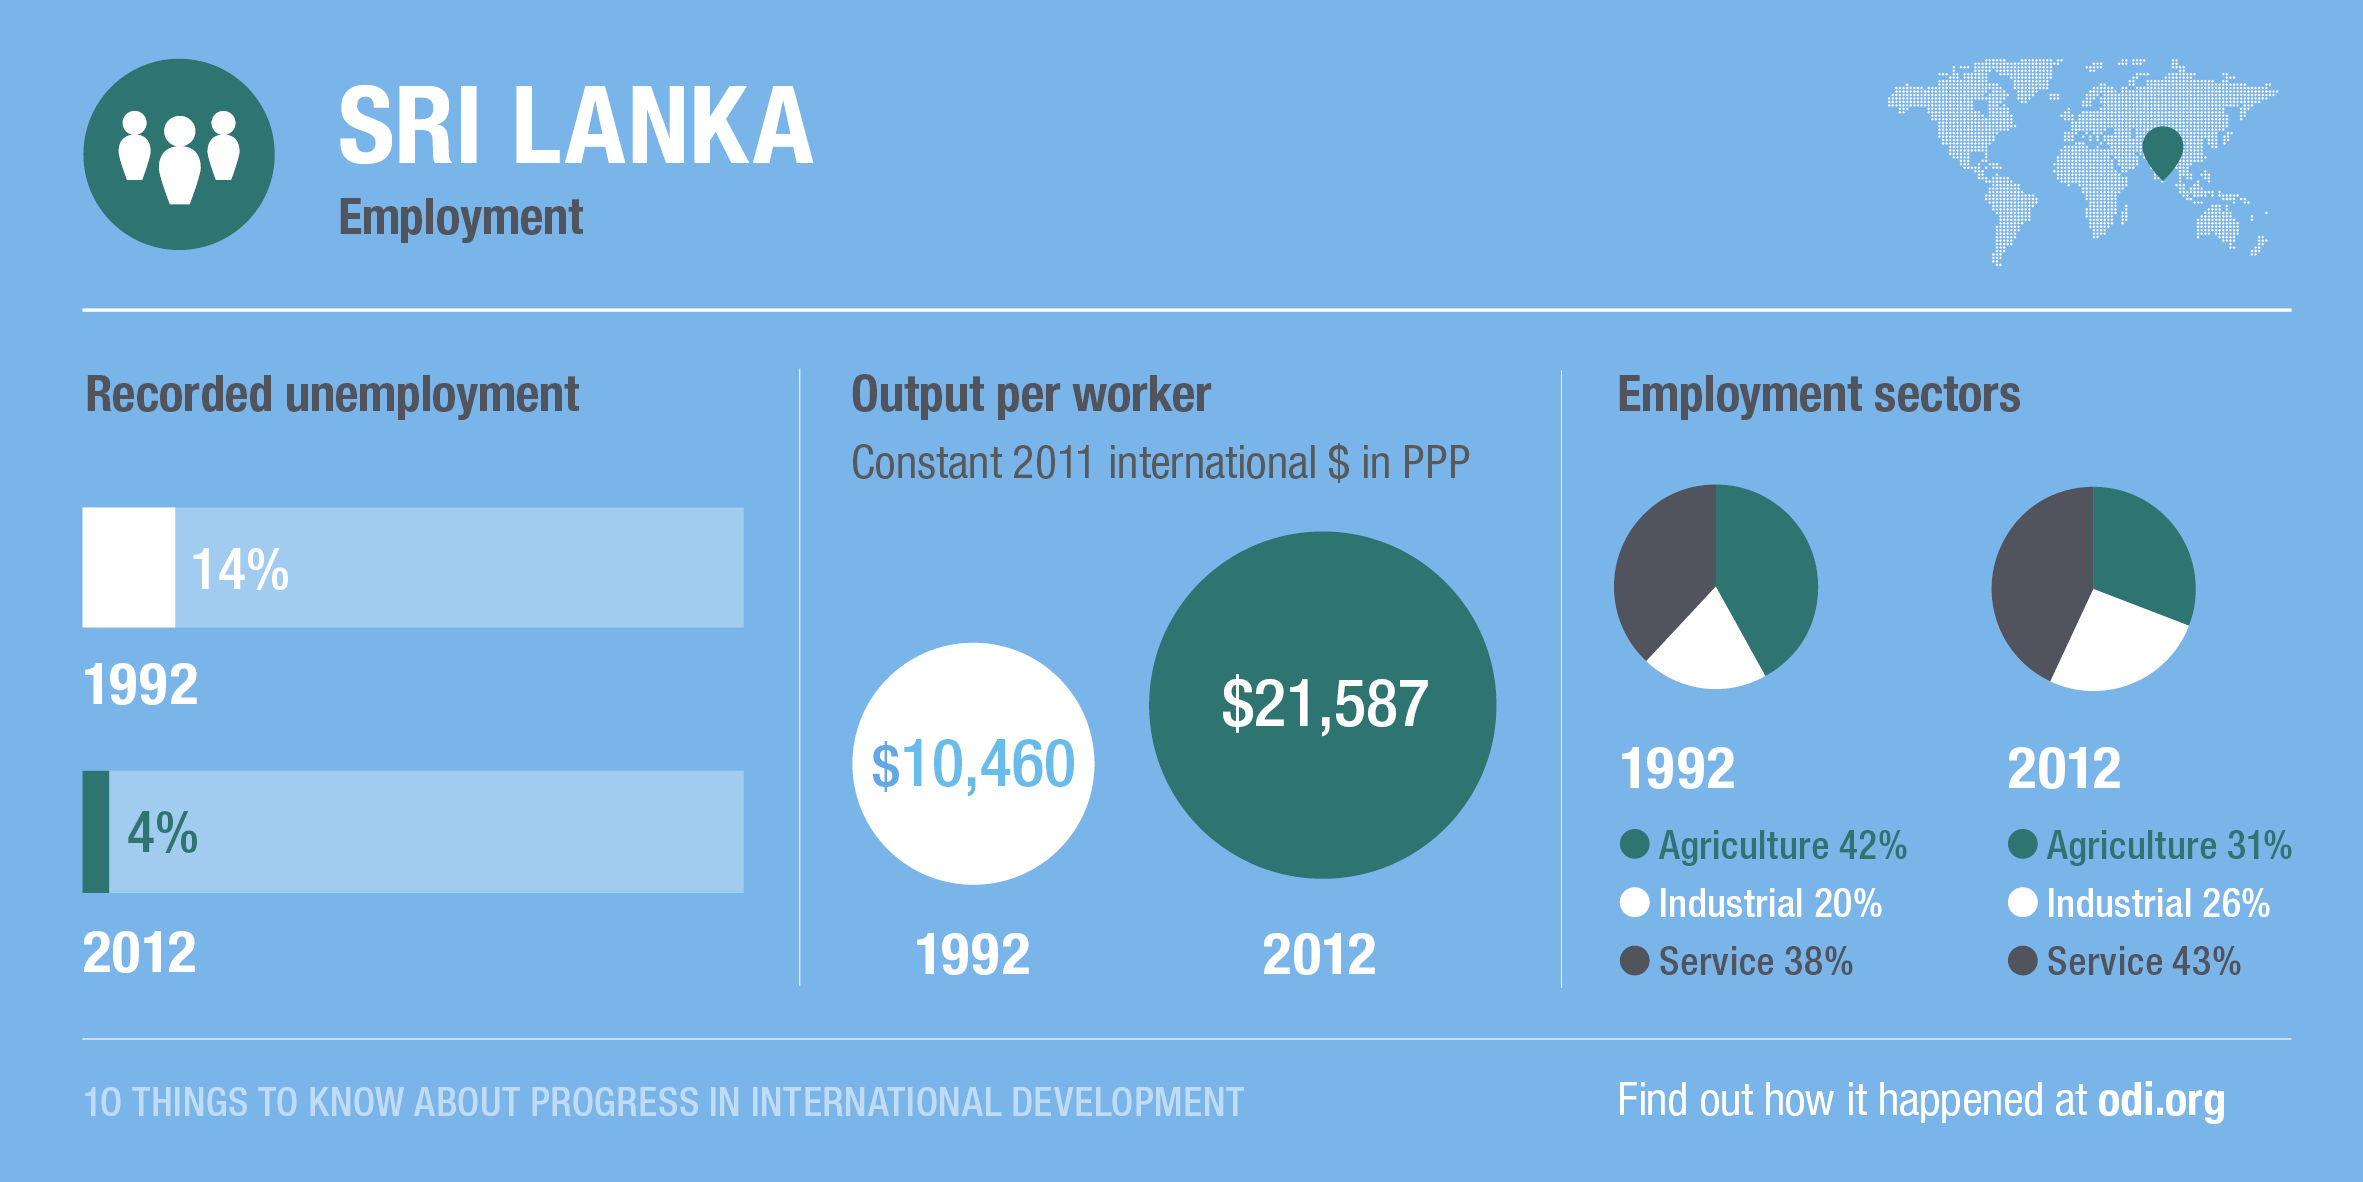 Sri Lanka's progress on employment